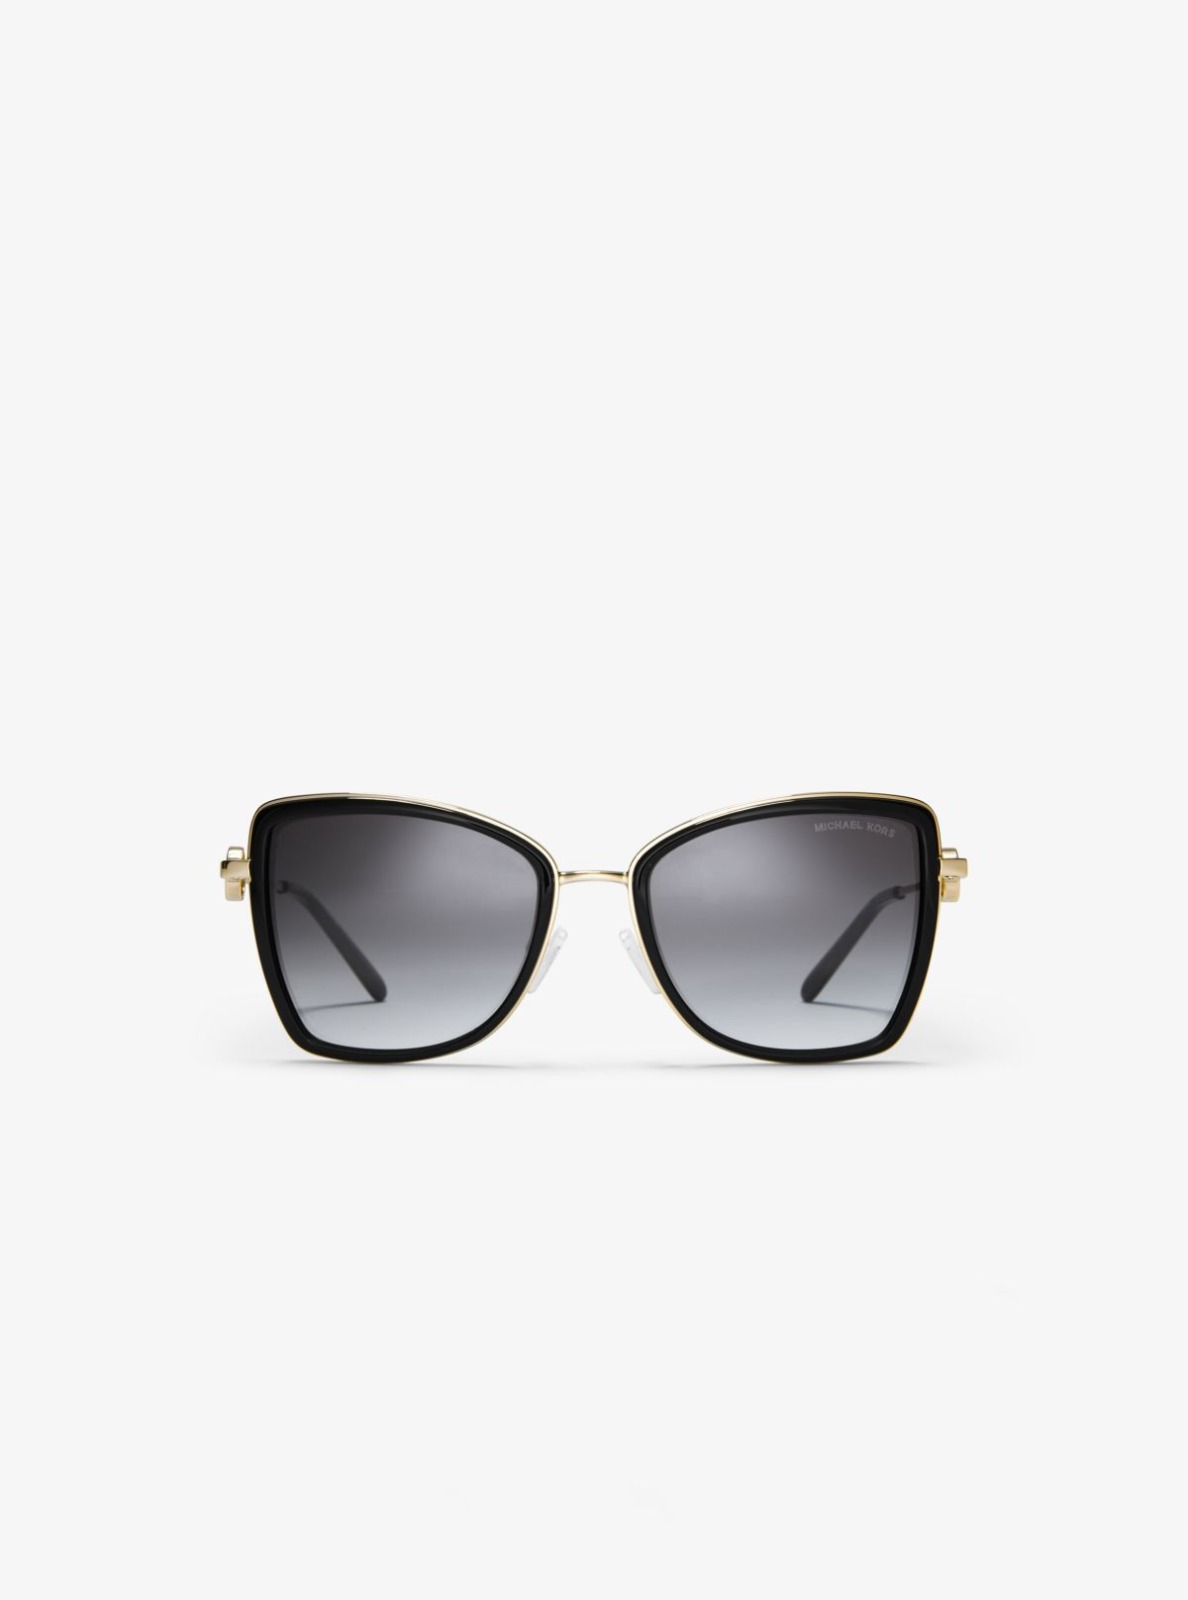 Michael Kors Sunglasses in Gold GOOFASH